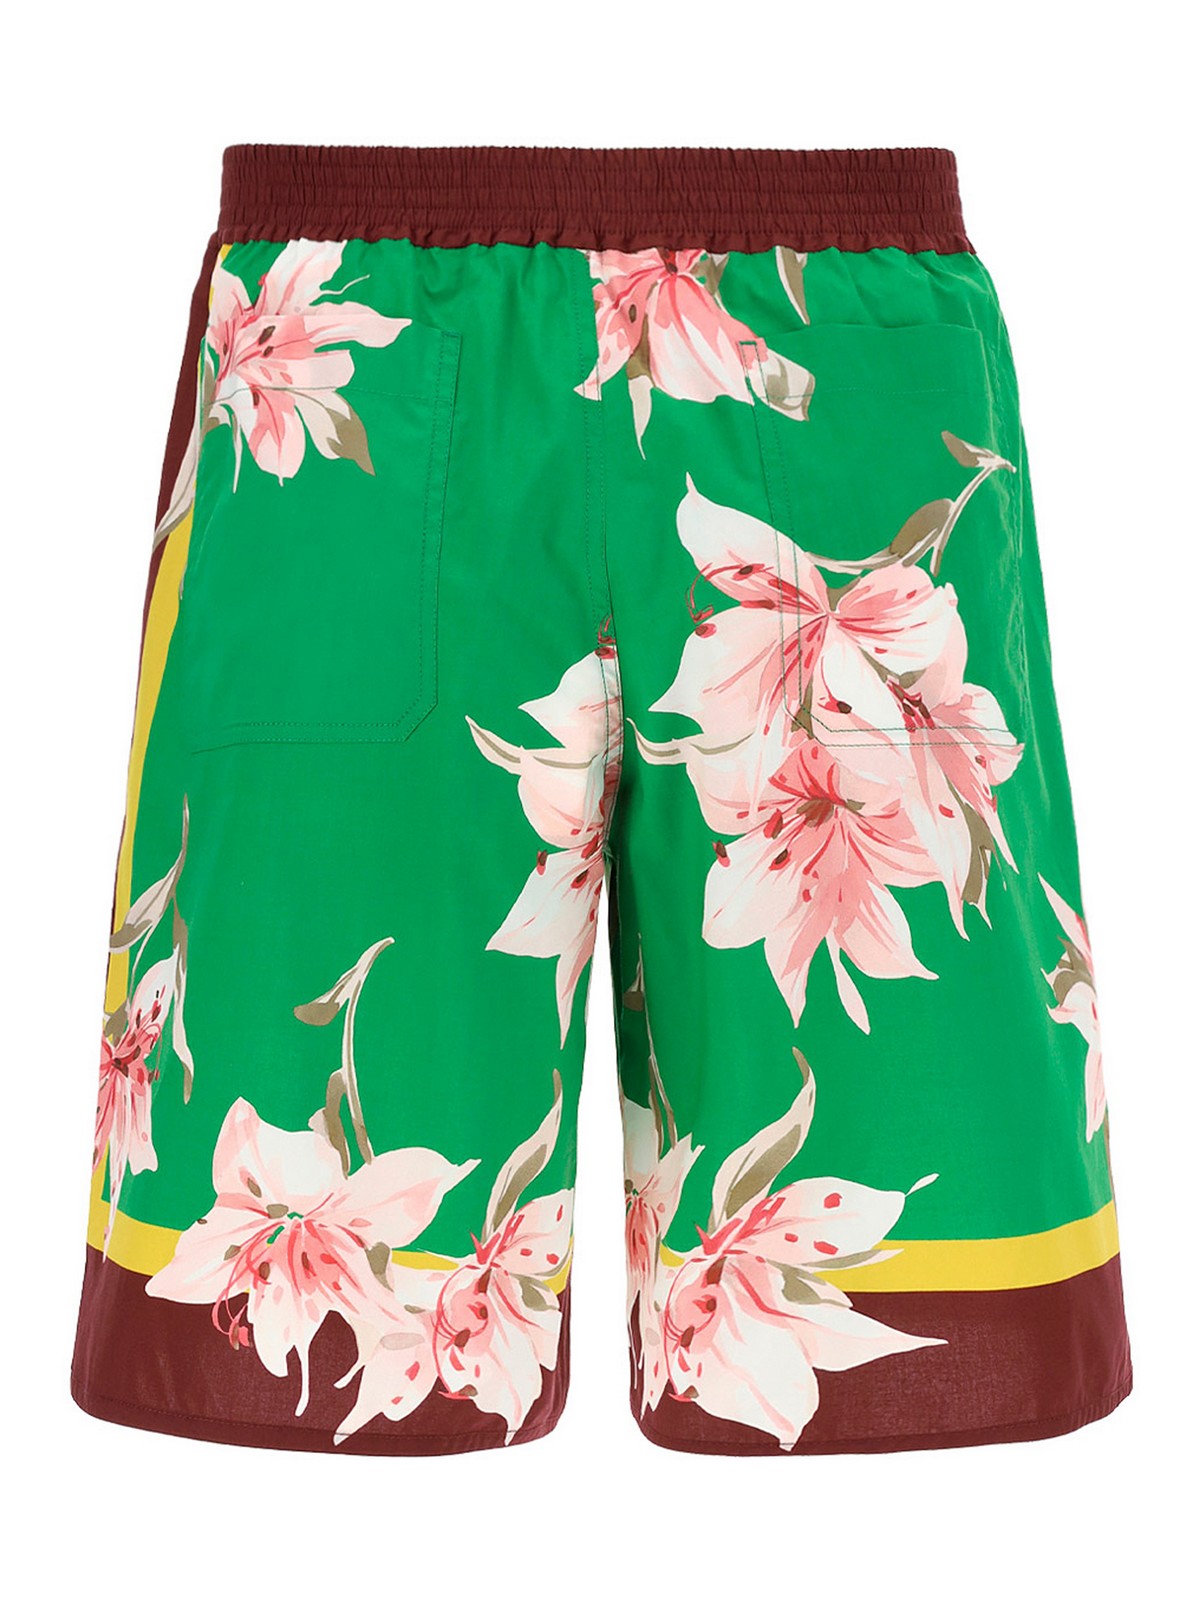 Floral print bermuda shorts